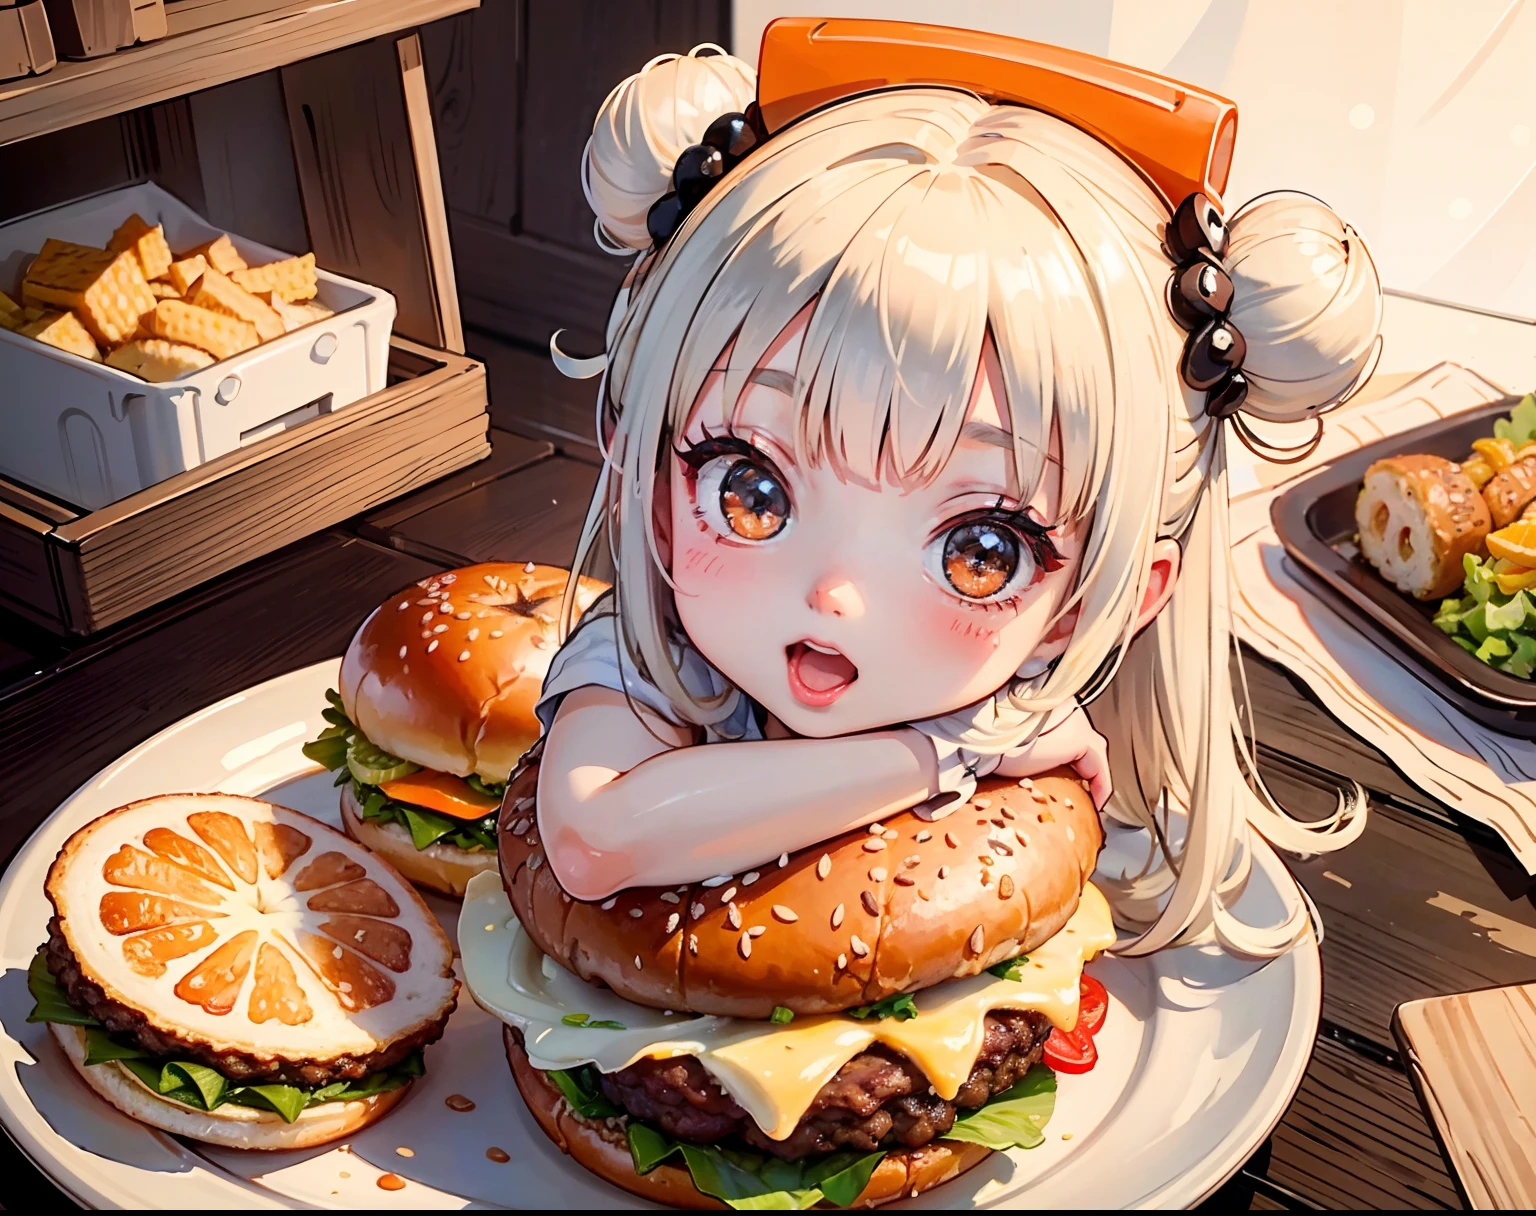 An ultra-realistic and mouthwatering hamburger obra maestra, Con una pequeña niña animada acurrucada dentro del bollo, mostrando las jugosas texturas de la hamburguesa, luz naranja suave, obra maestra, alta calidad, kfc, v I 50